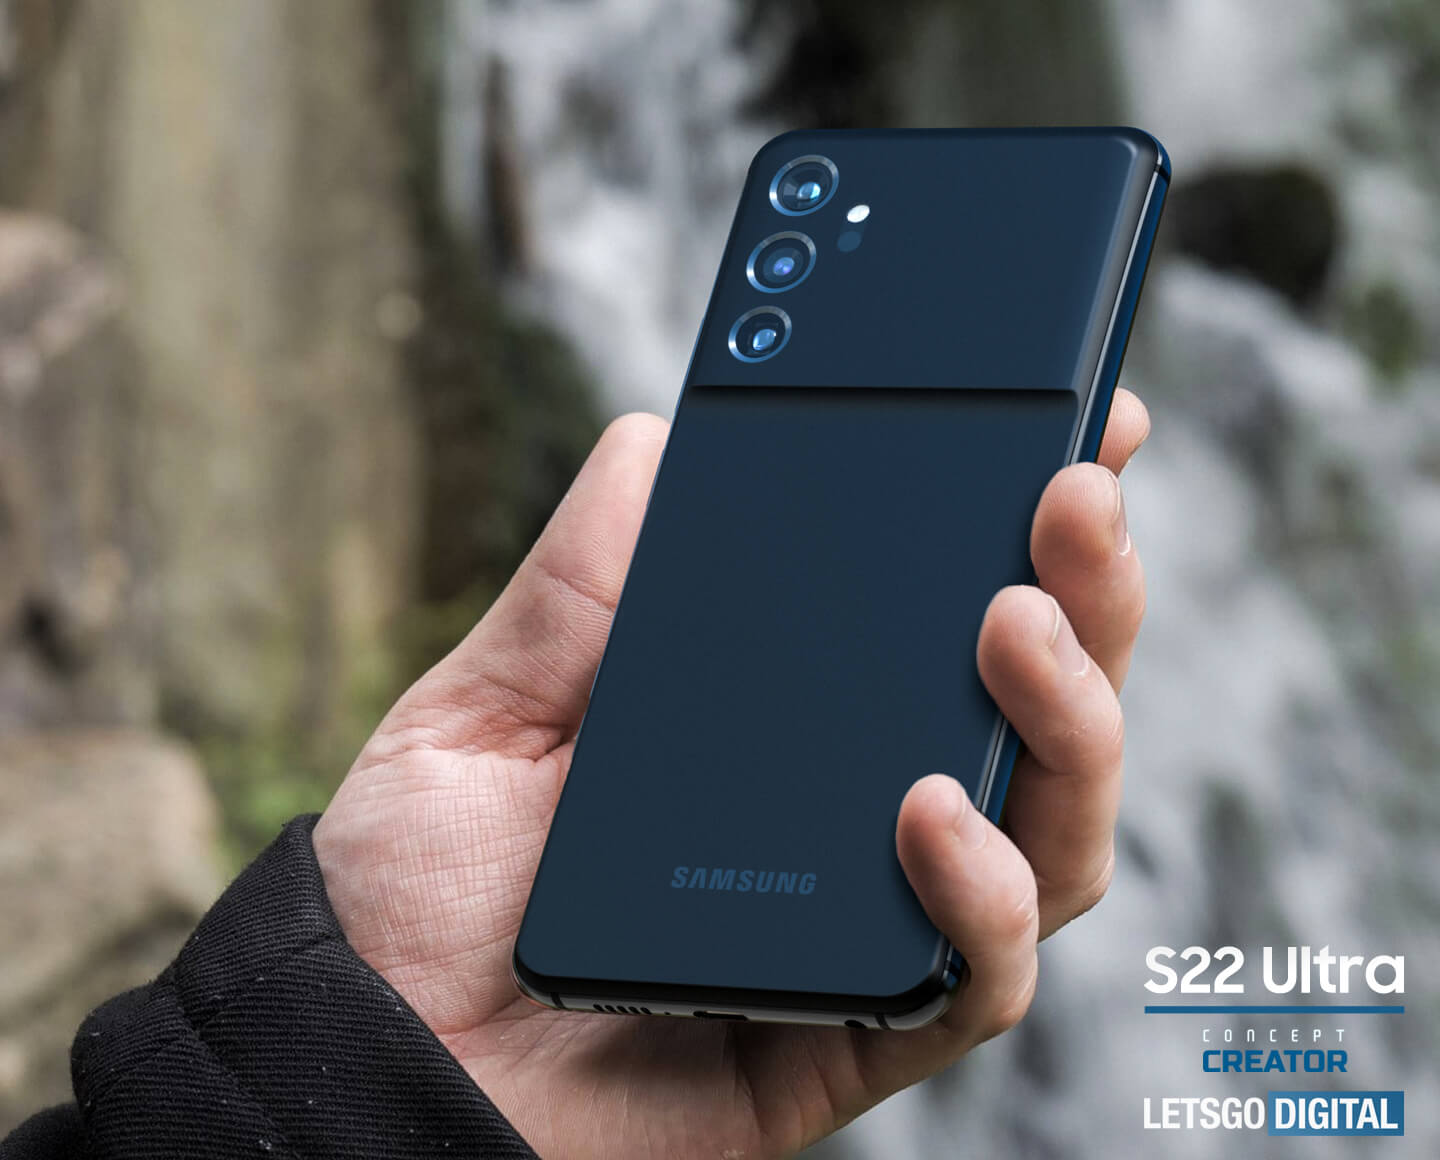 Samsung Galaxy S22 concept